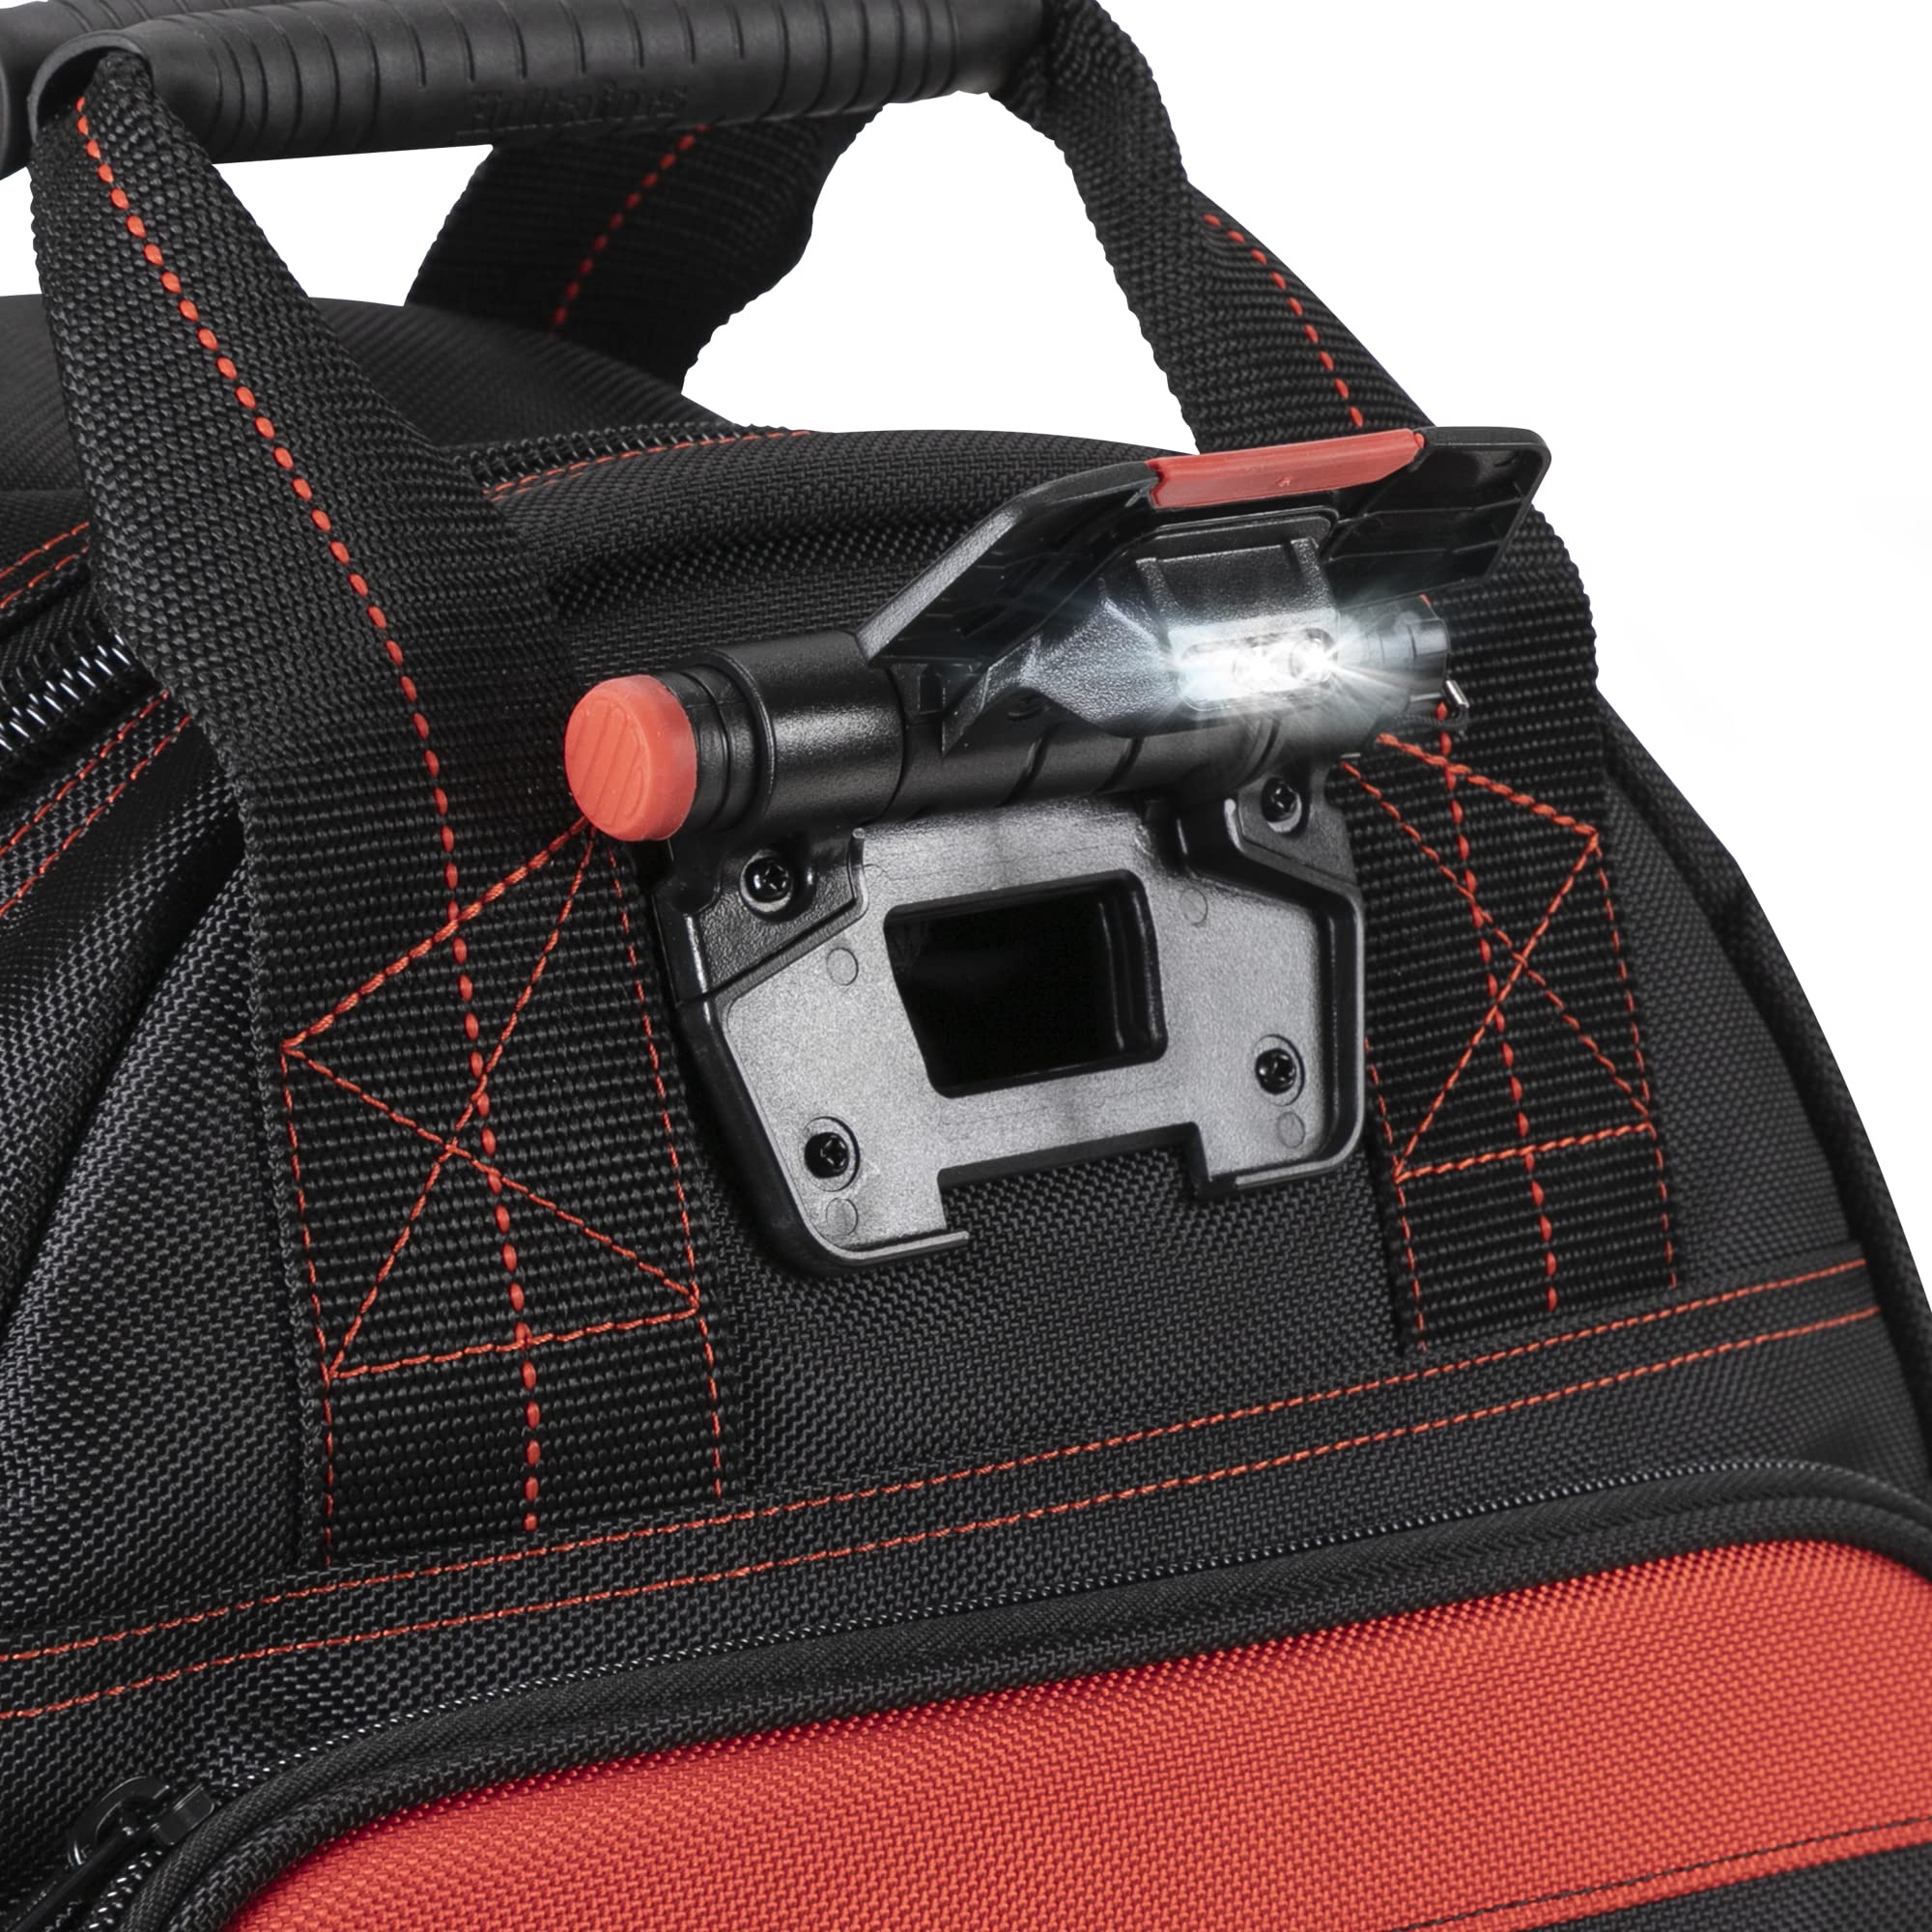 Hultafors Work Gear HTL523 Lighted Tool Backpack, 50 Pockets, Heavy Duty Ballistic Polyester Tool Carrier, Adjustable Swivel Light, Power Tool Strap, Tablet/Laptop Pocket